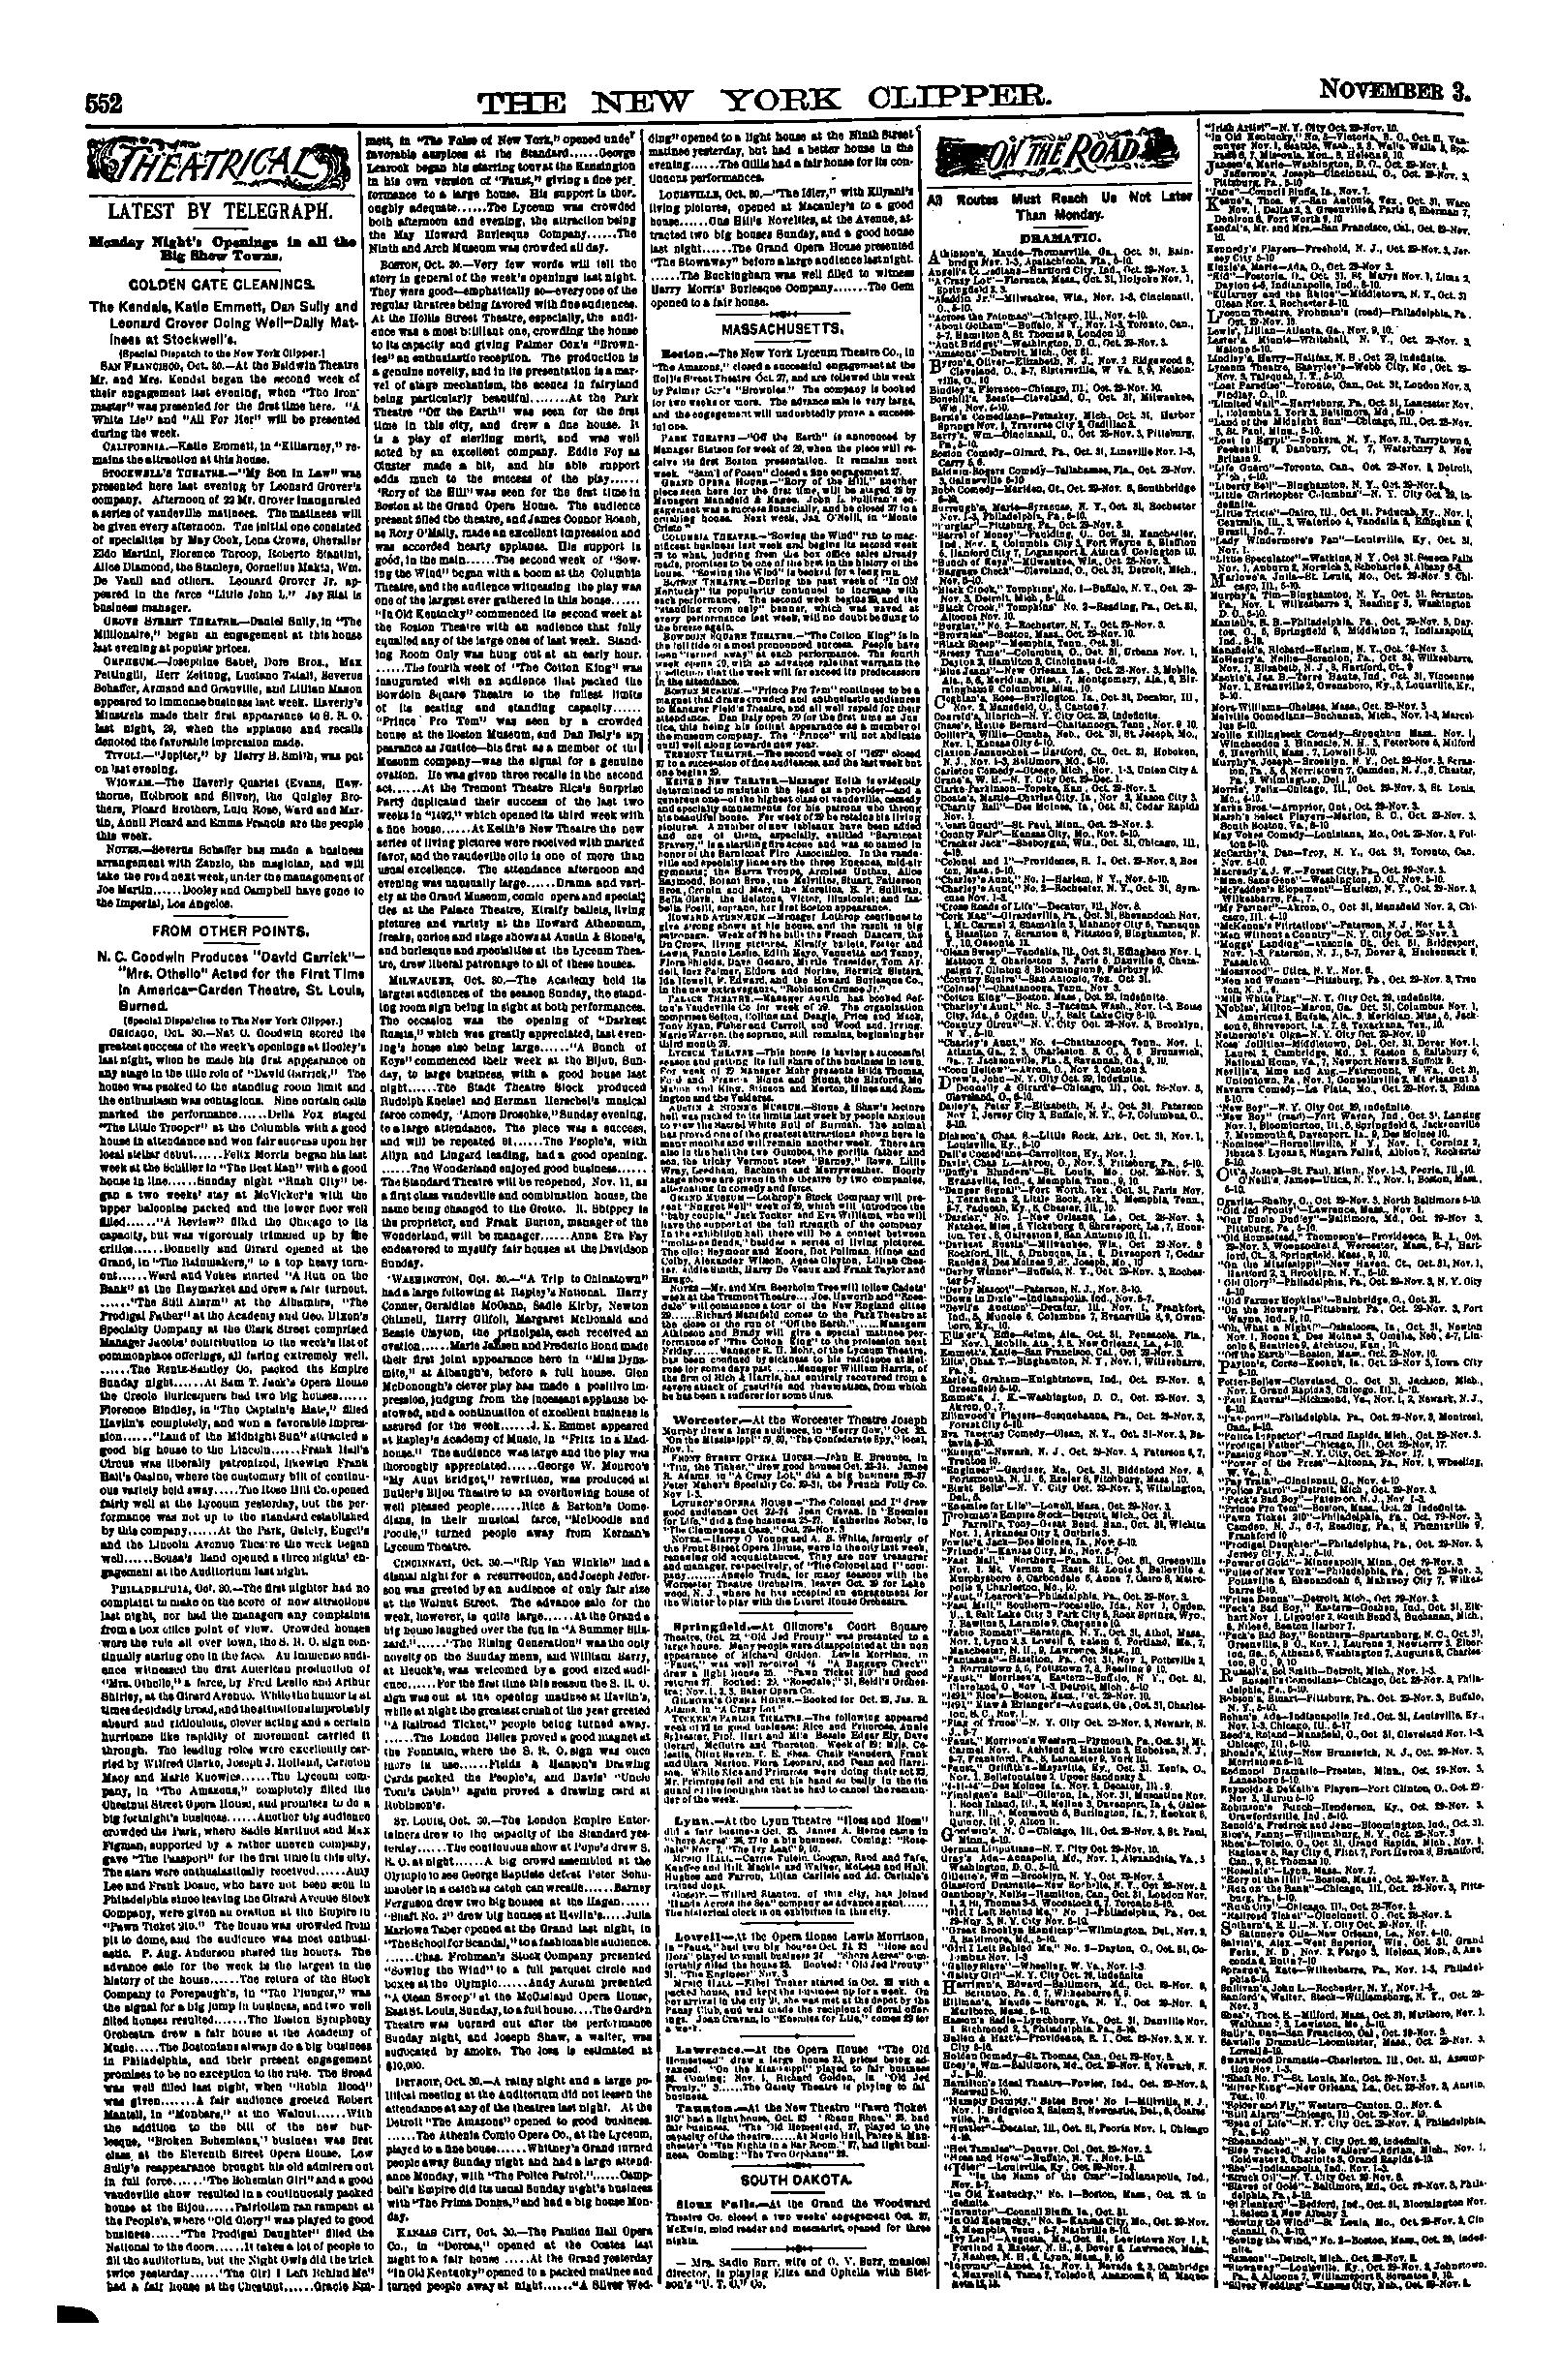 New York Clipper (November 1894)